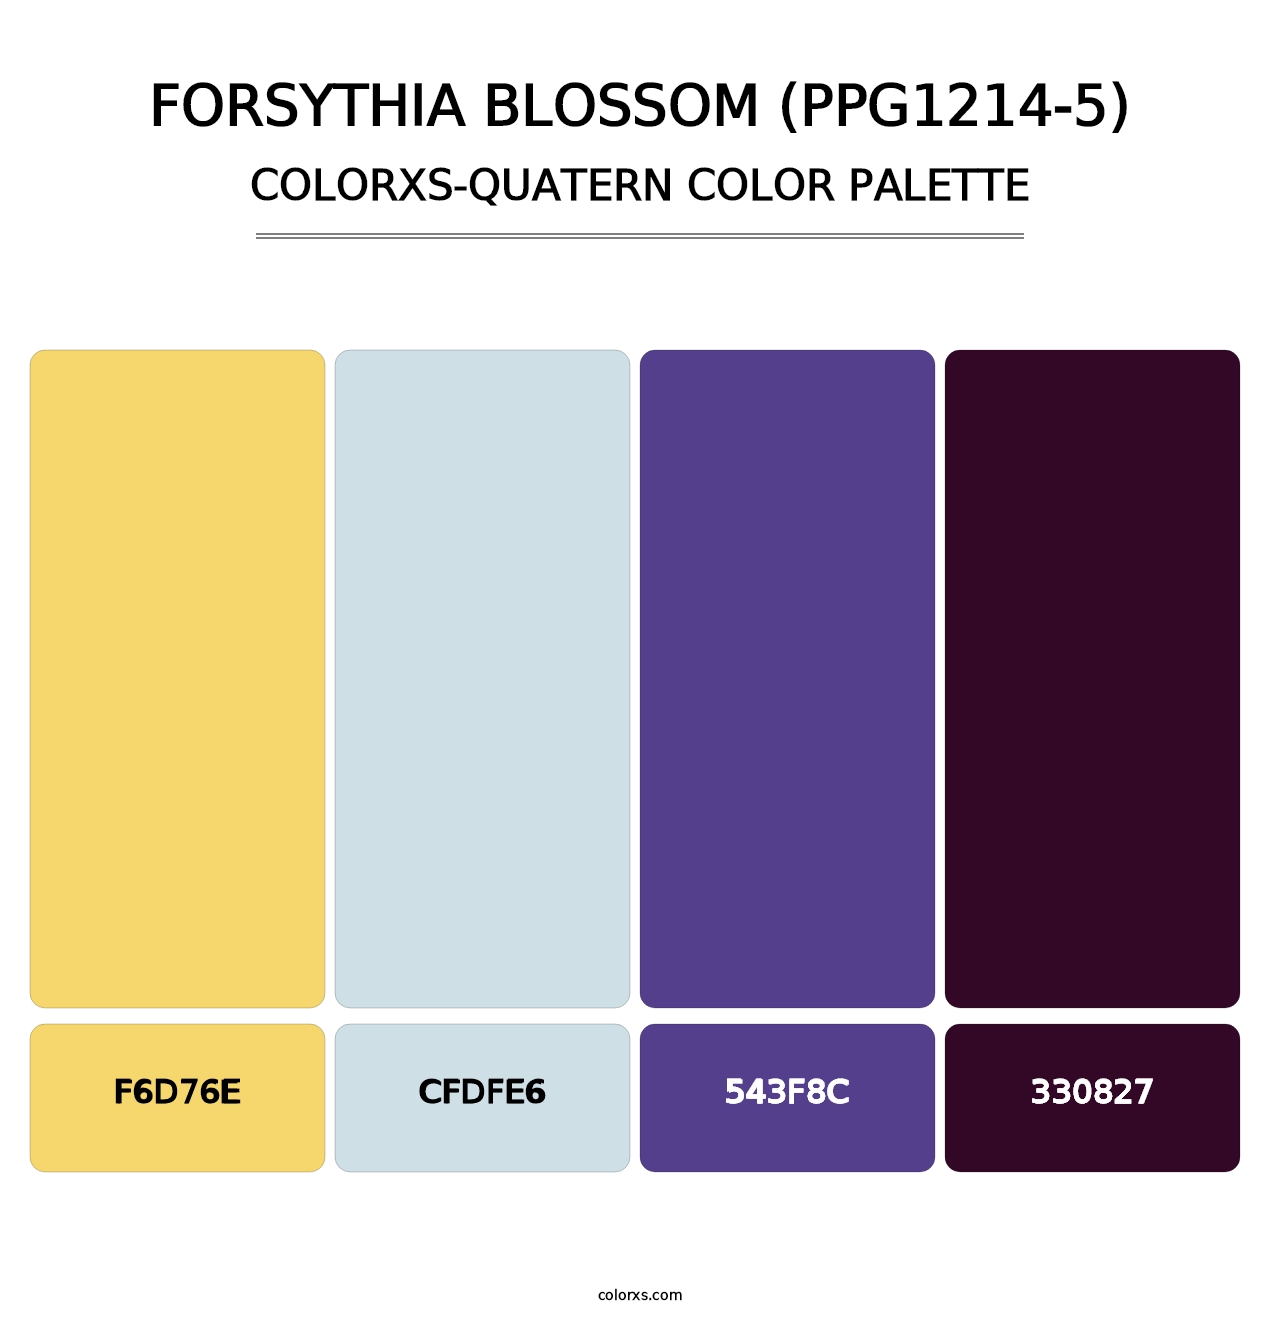 Forsythia Blossom (PPG1214-5) - Colorxs Quatern Palette